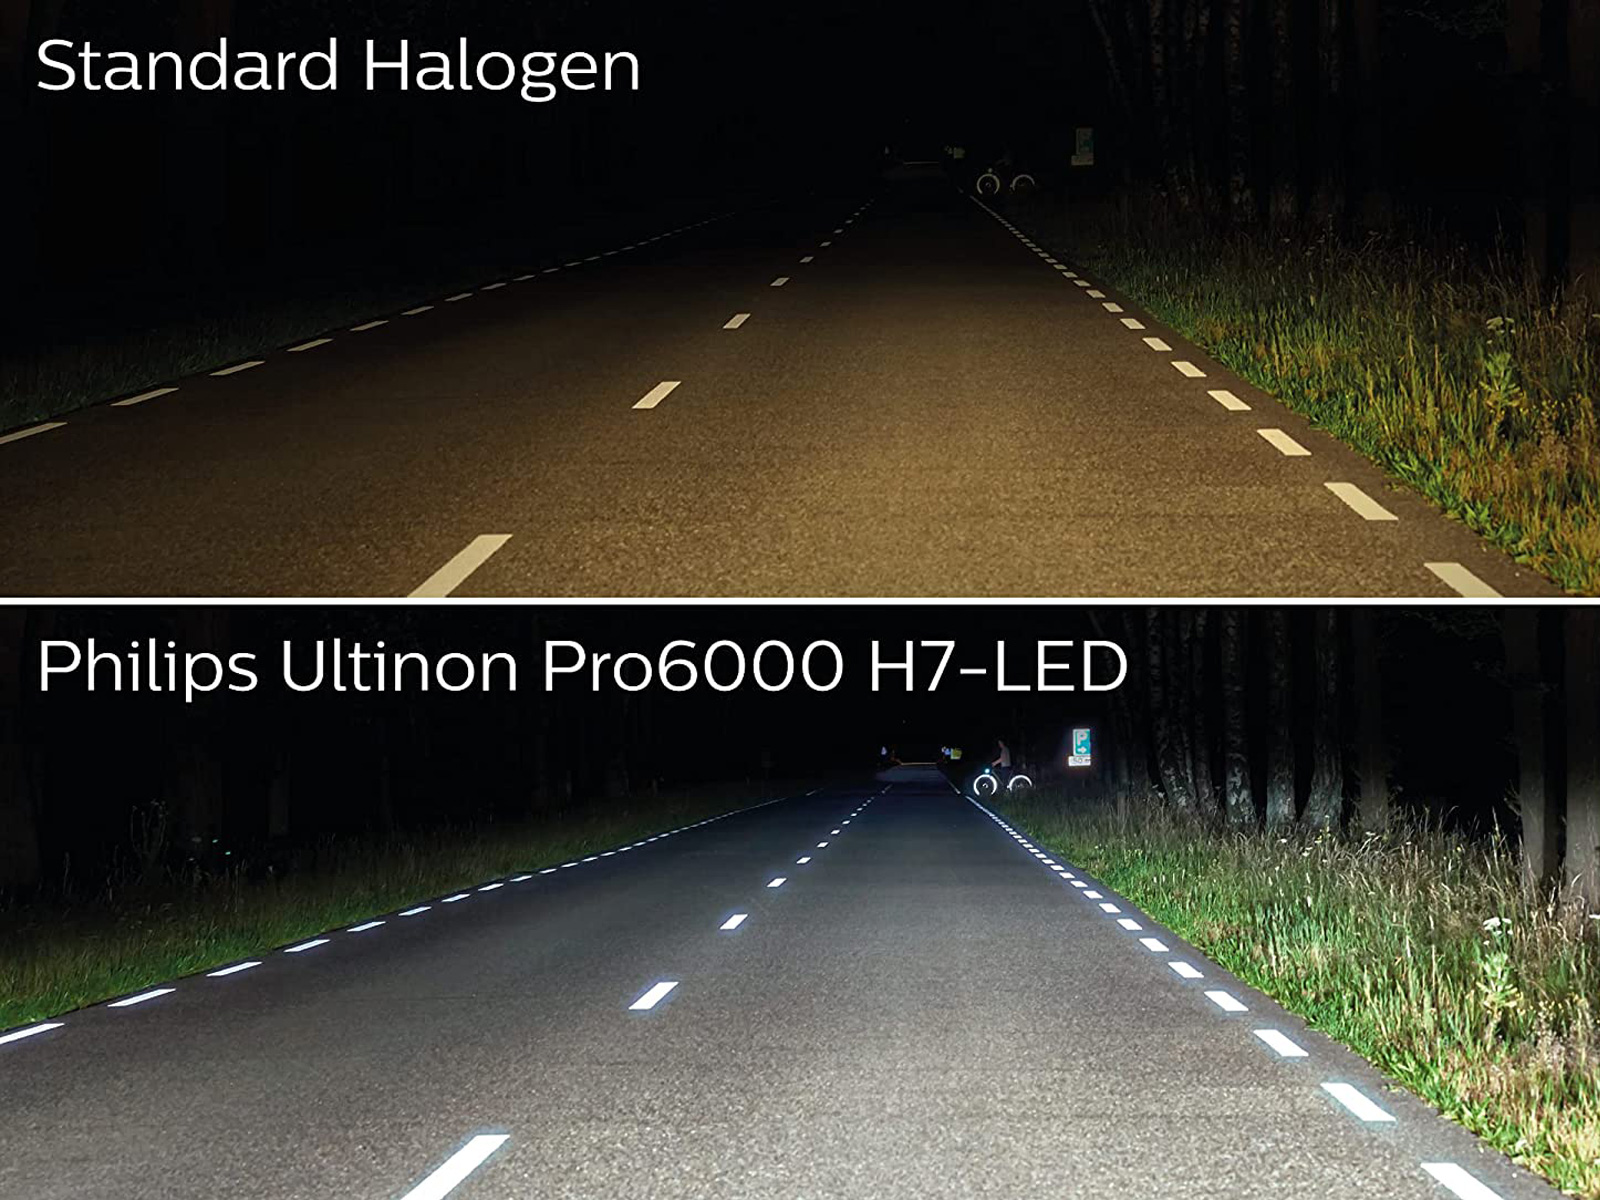 2x PHILIPS Ultinon Pro6000 H7 LED 11972X2 mit Straßenzulassung 12V +230%  5.800K